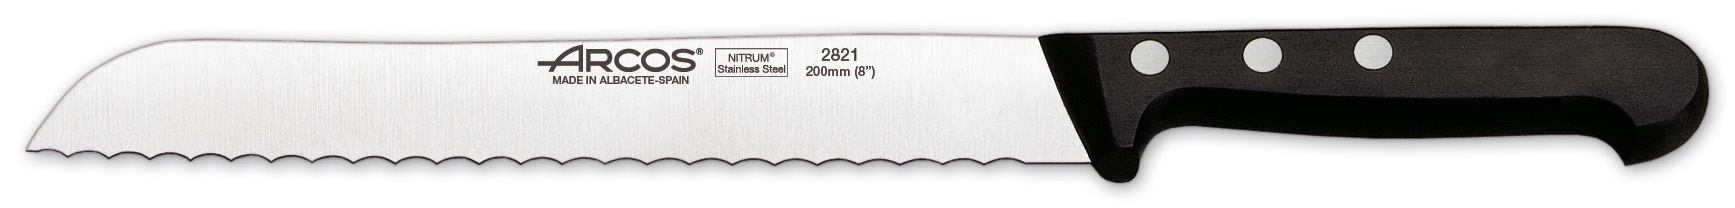 Brdkniv 20cm Polyoxy skaft / Bread knife